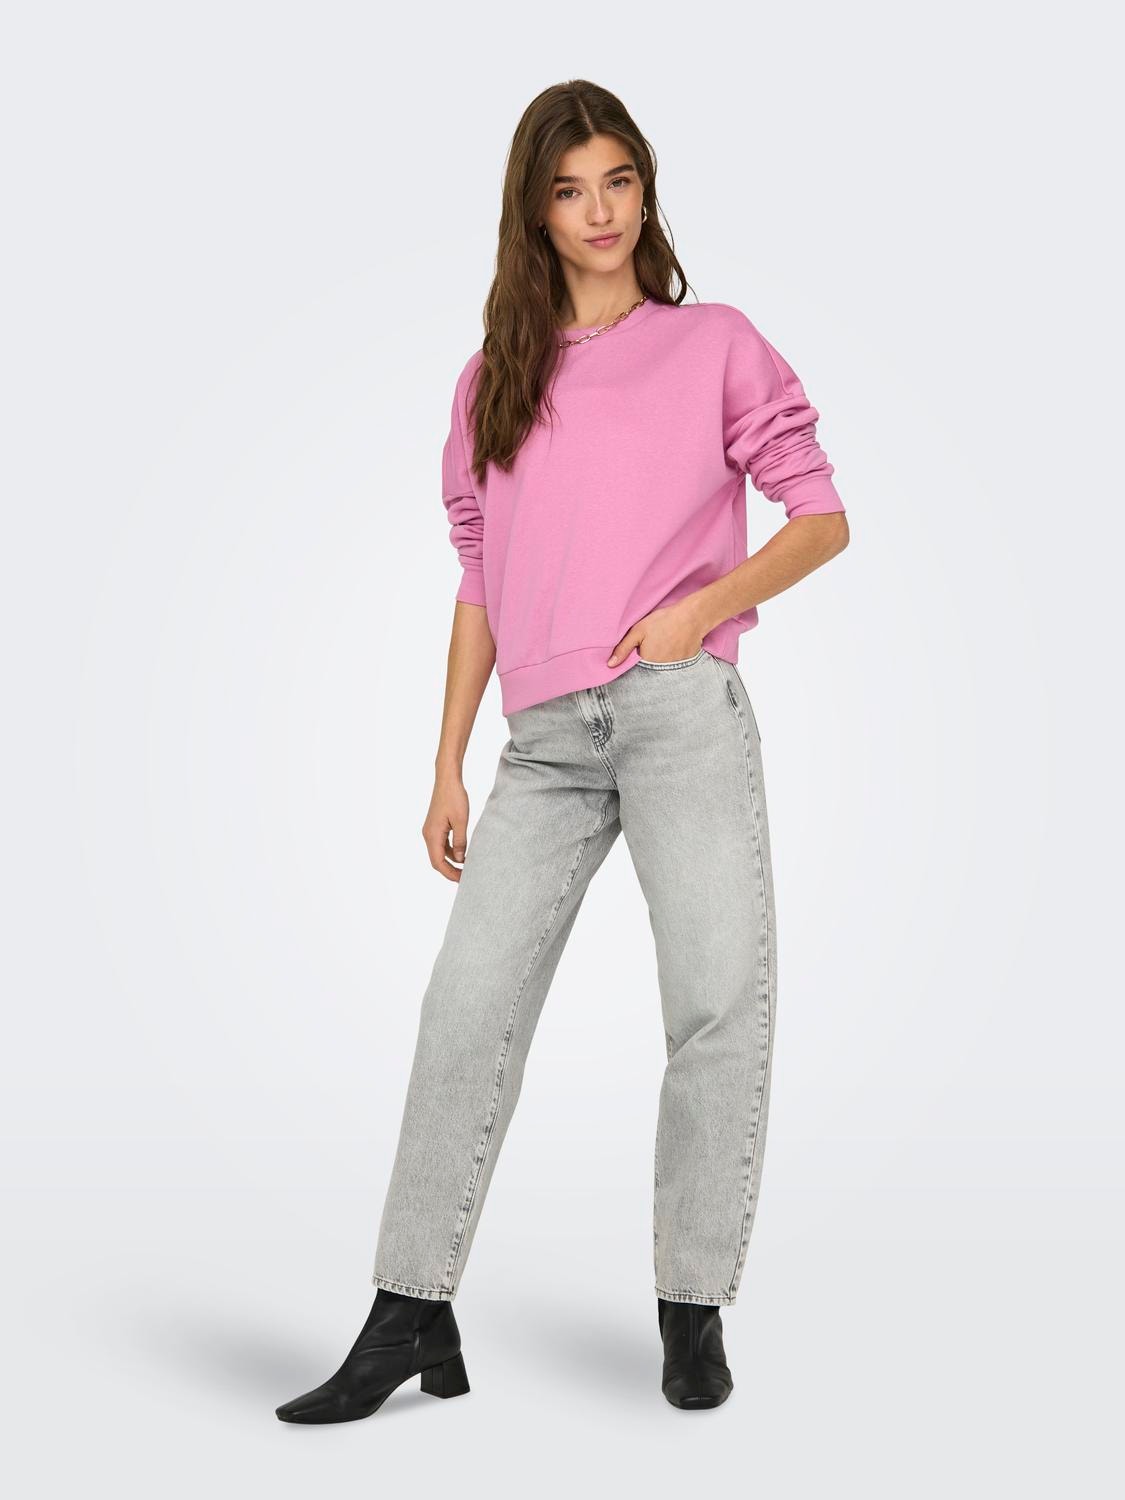 ONLY Regular fit O-hals Verlaagde schoudernaden Sweatshirt -Fuchsia Pink - 15321400